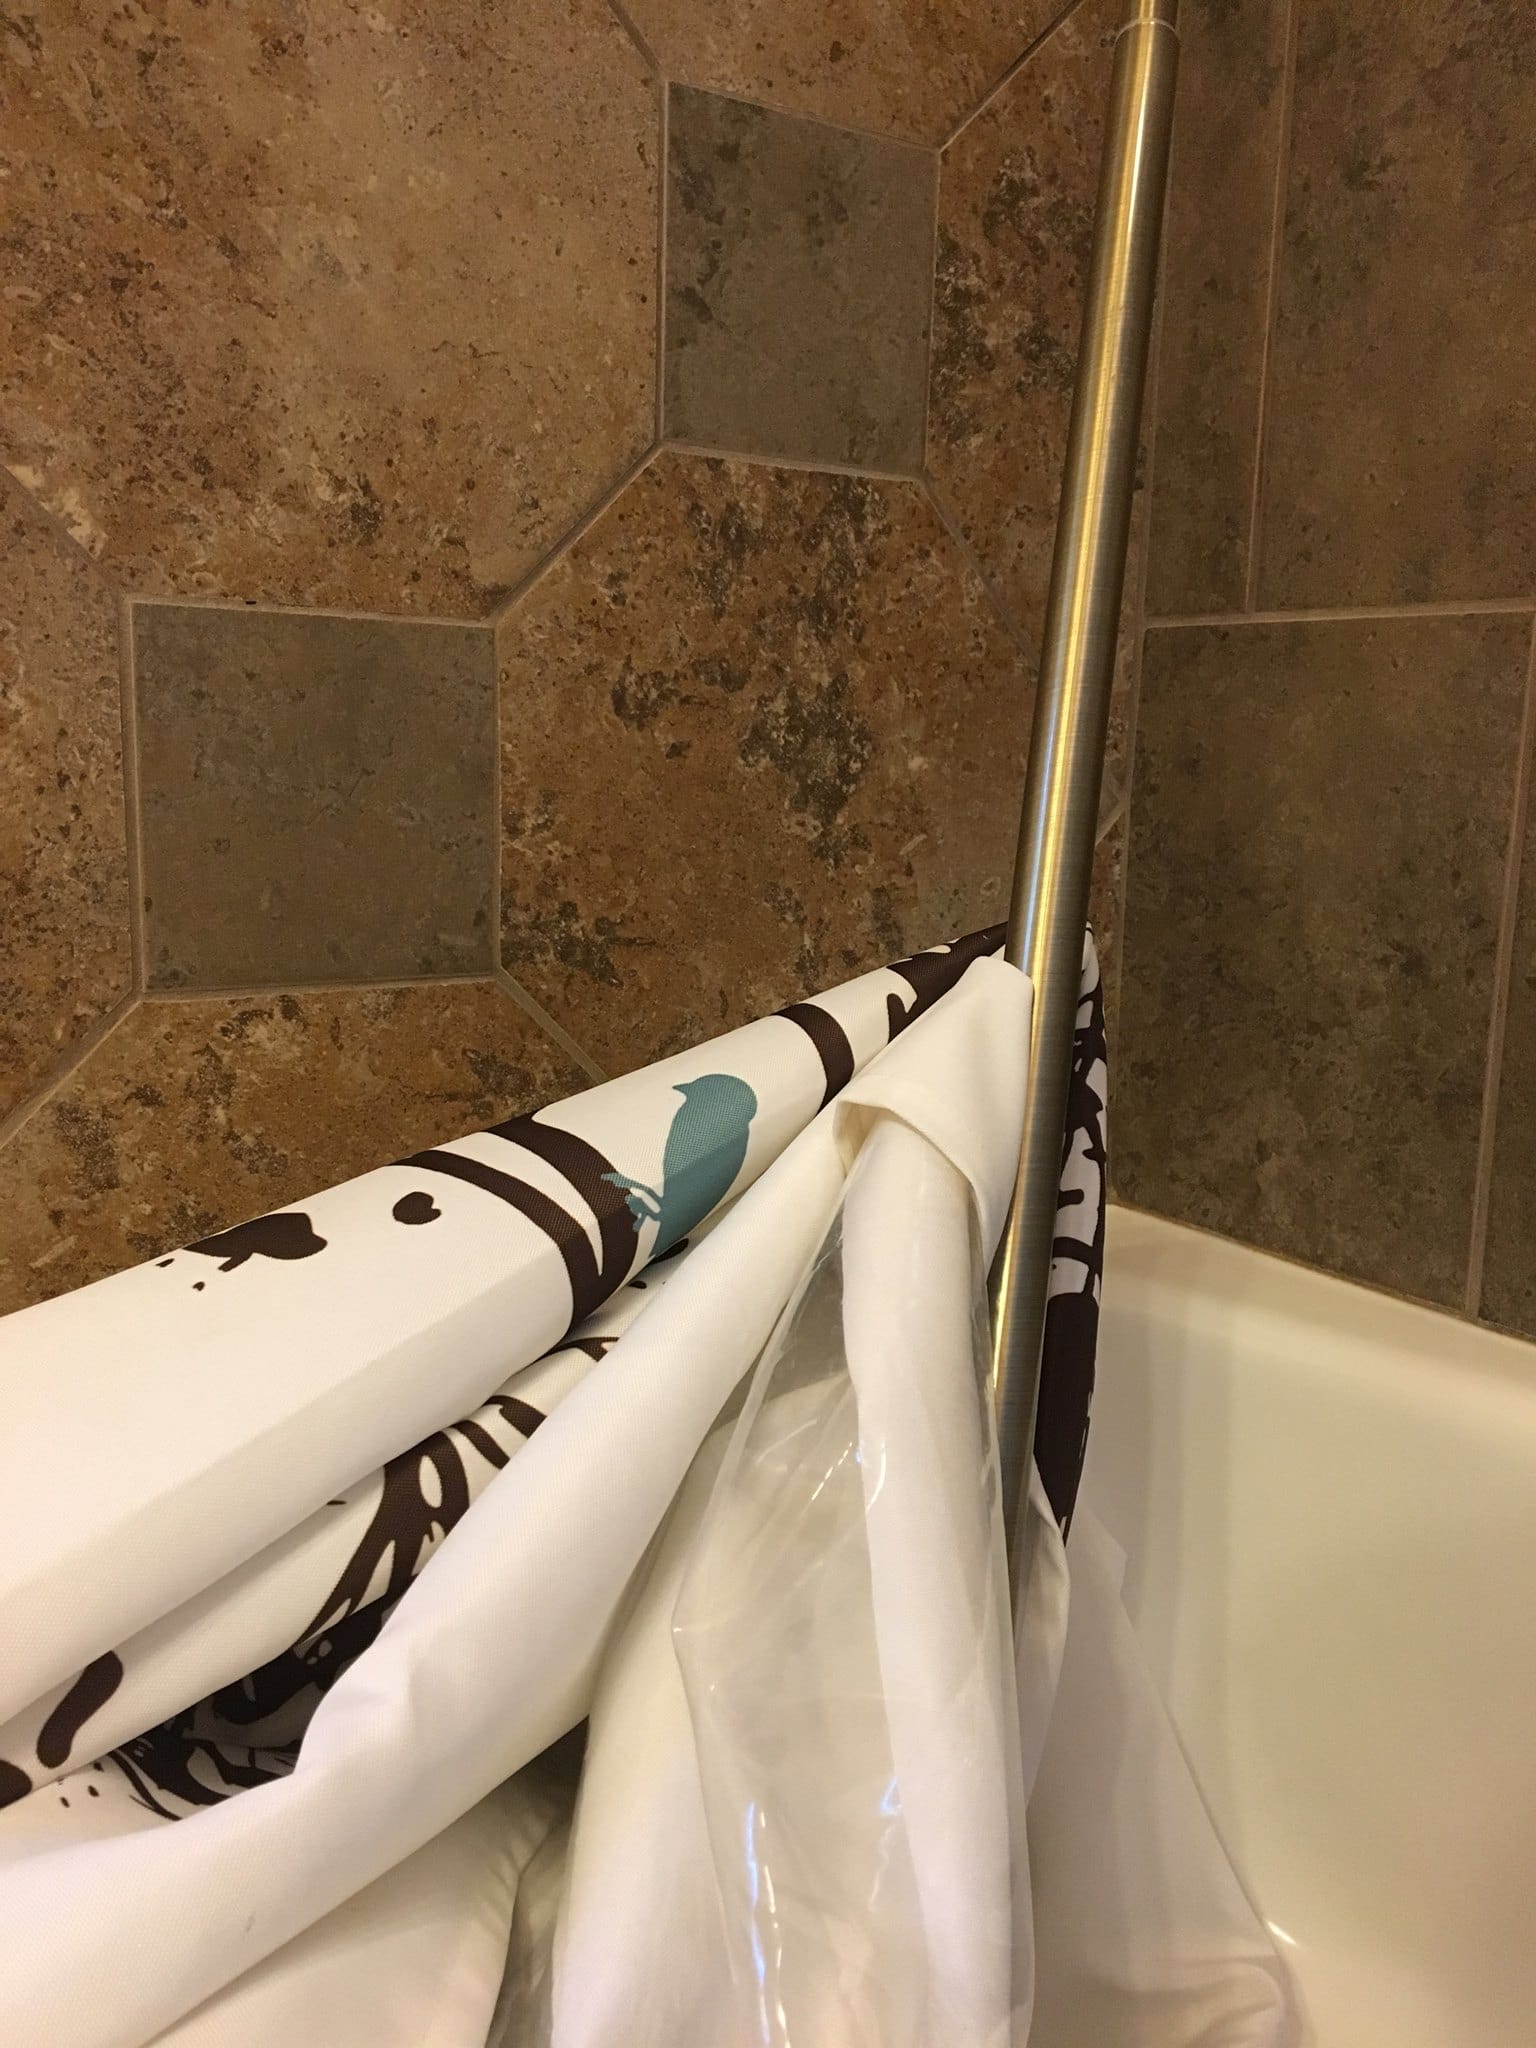 a shower curtain falling in the bathtub